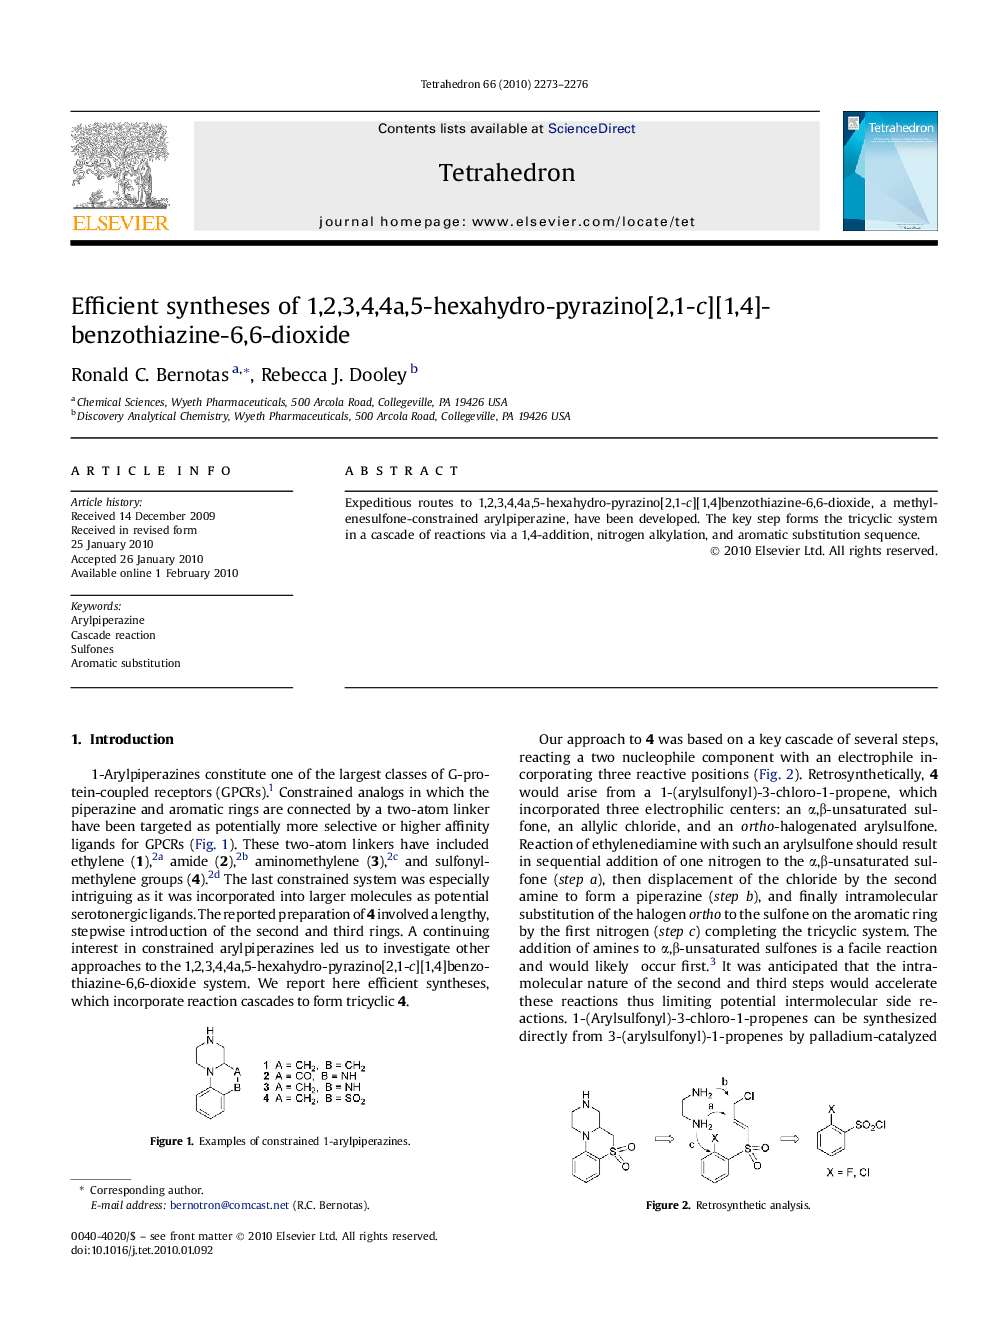 Efficient syntheses of 1,2,3,4,4a,5-hexahydro-pyrazino[2,1-c][1,4]benzothiazine-6,6-dioxide